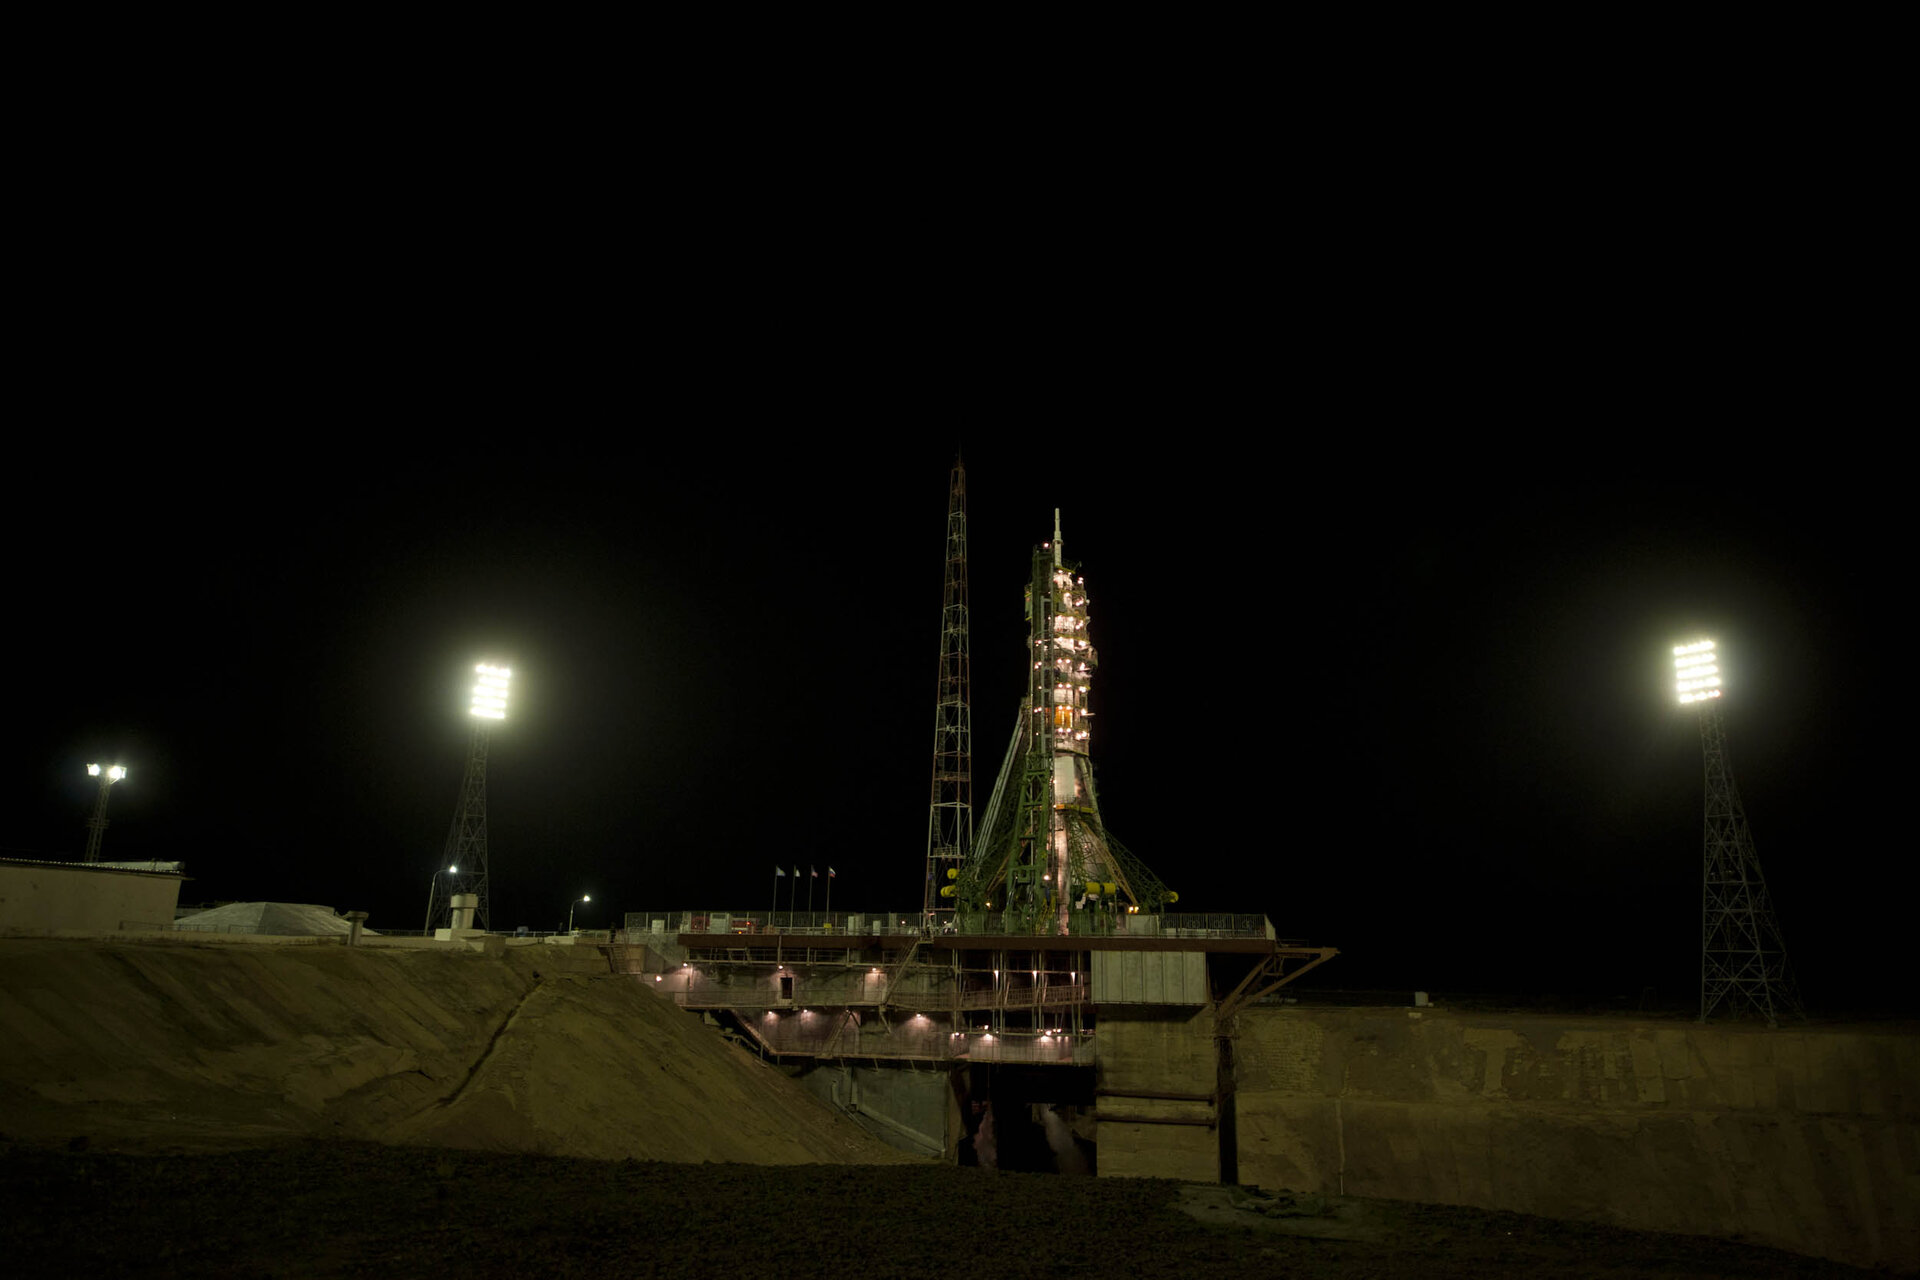 Soyuz launcher waiting for lif-off